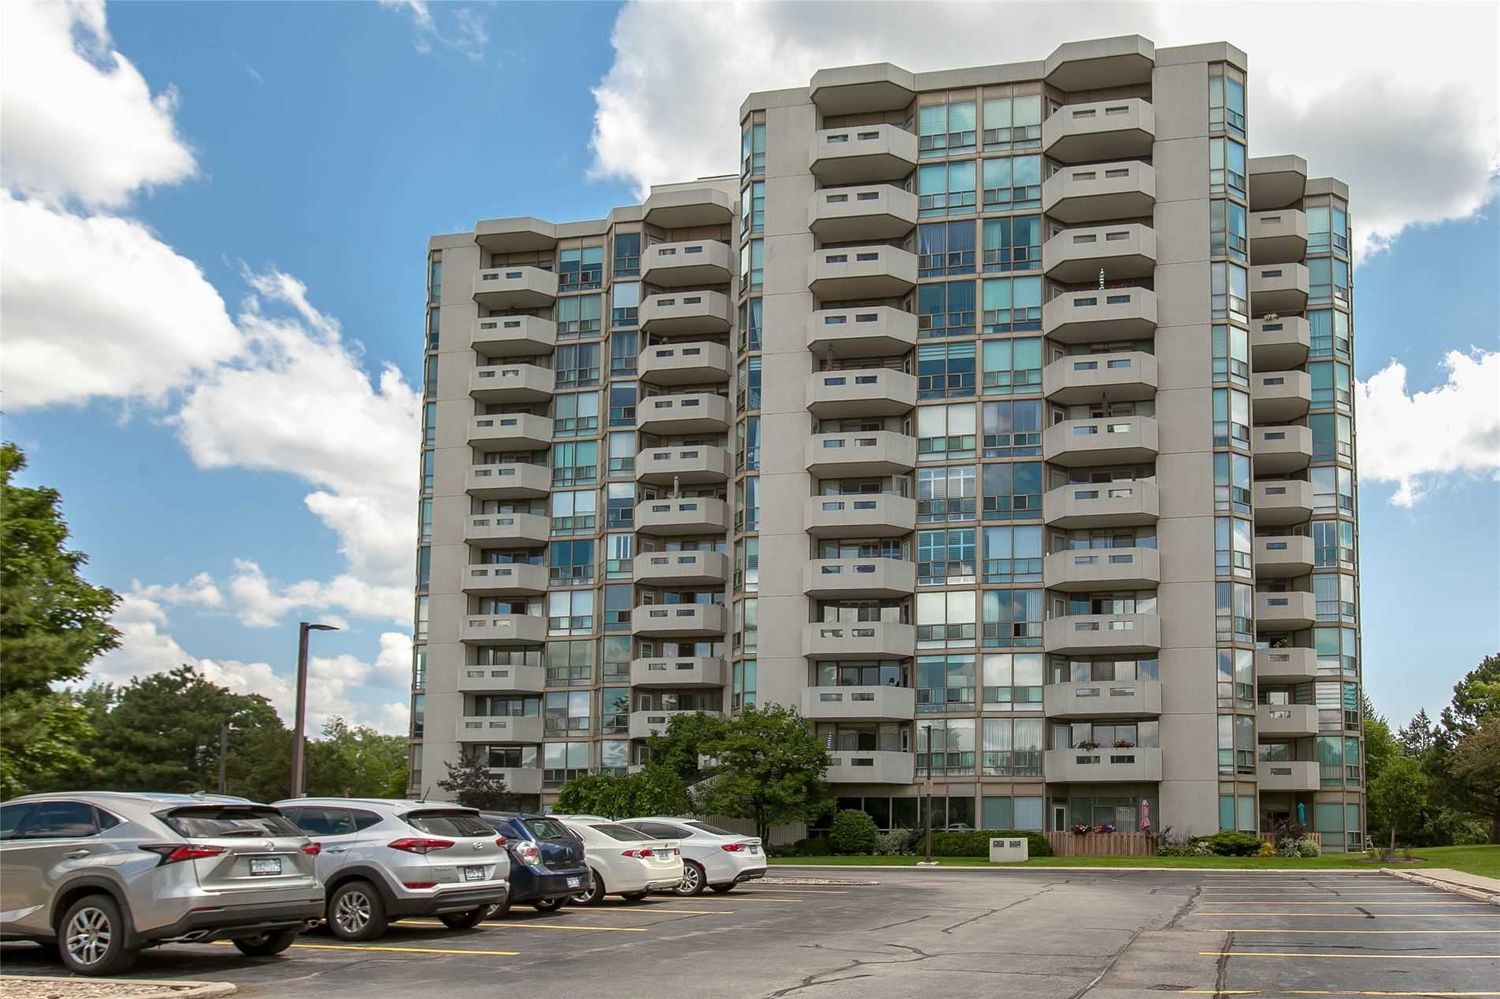 5080 Pinedale Avenue. Pinedale Estates II Condos is located in  Burlington, Toronto - image #2 of 3